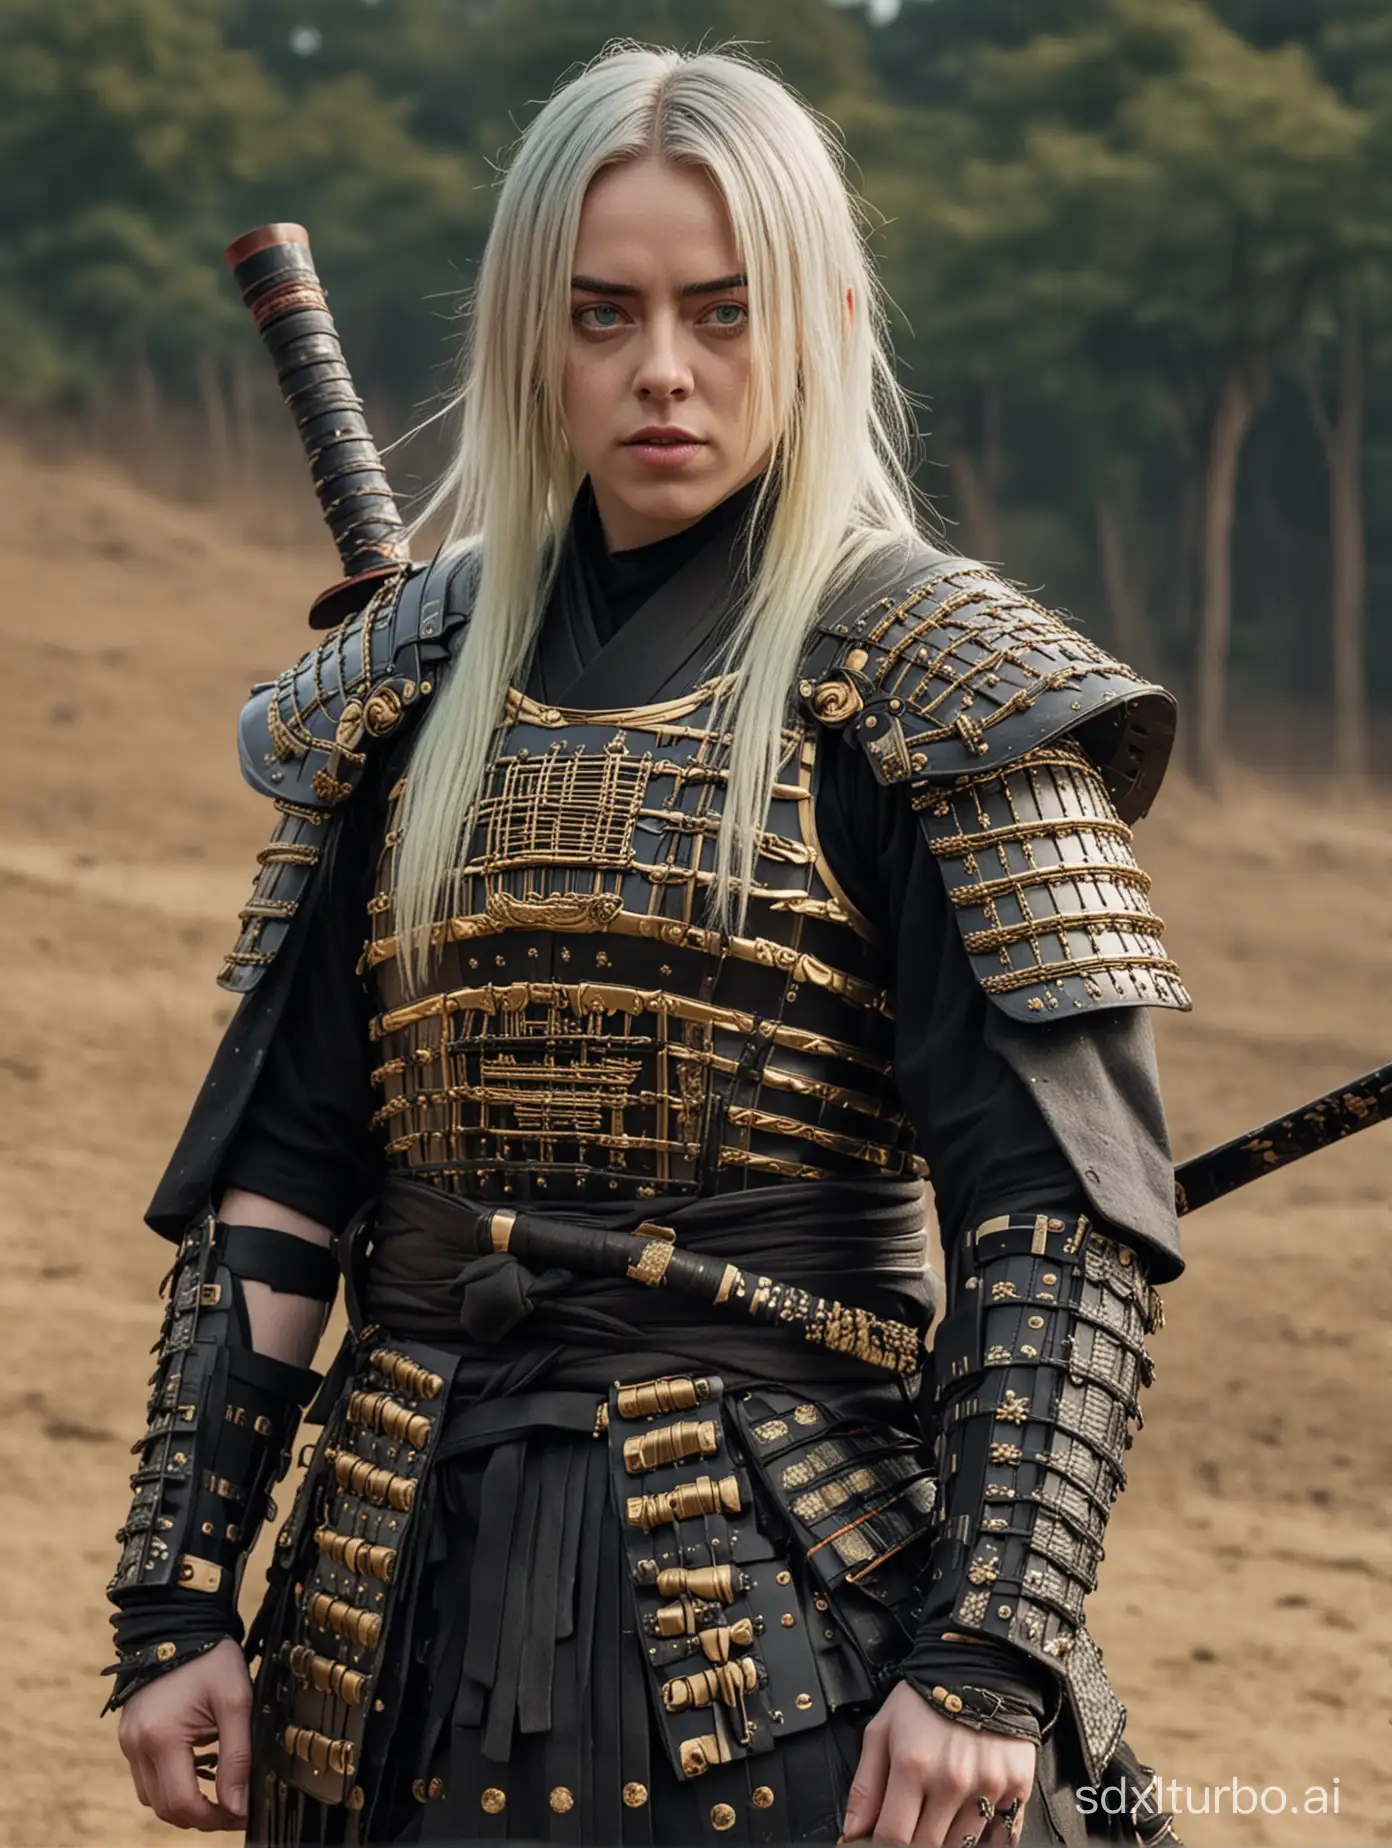 Billie-Eilish-in-Ancient-Japanese-Warrior-Armor-with-Katana-on-Battlefield